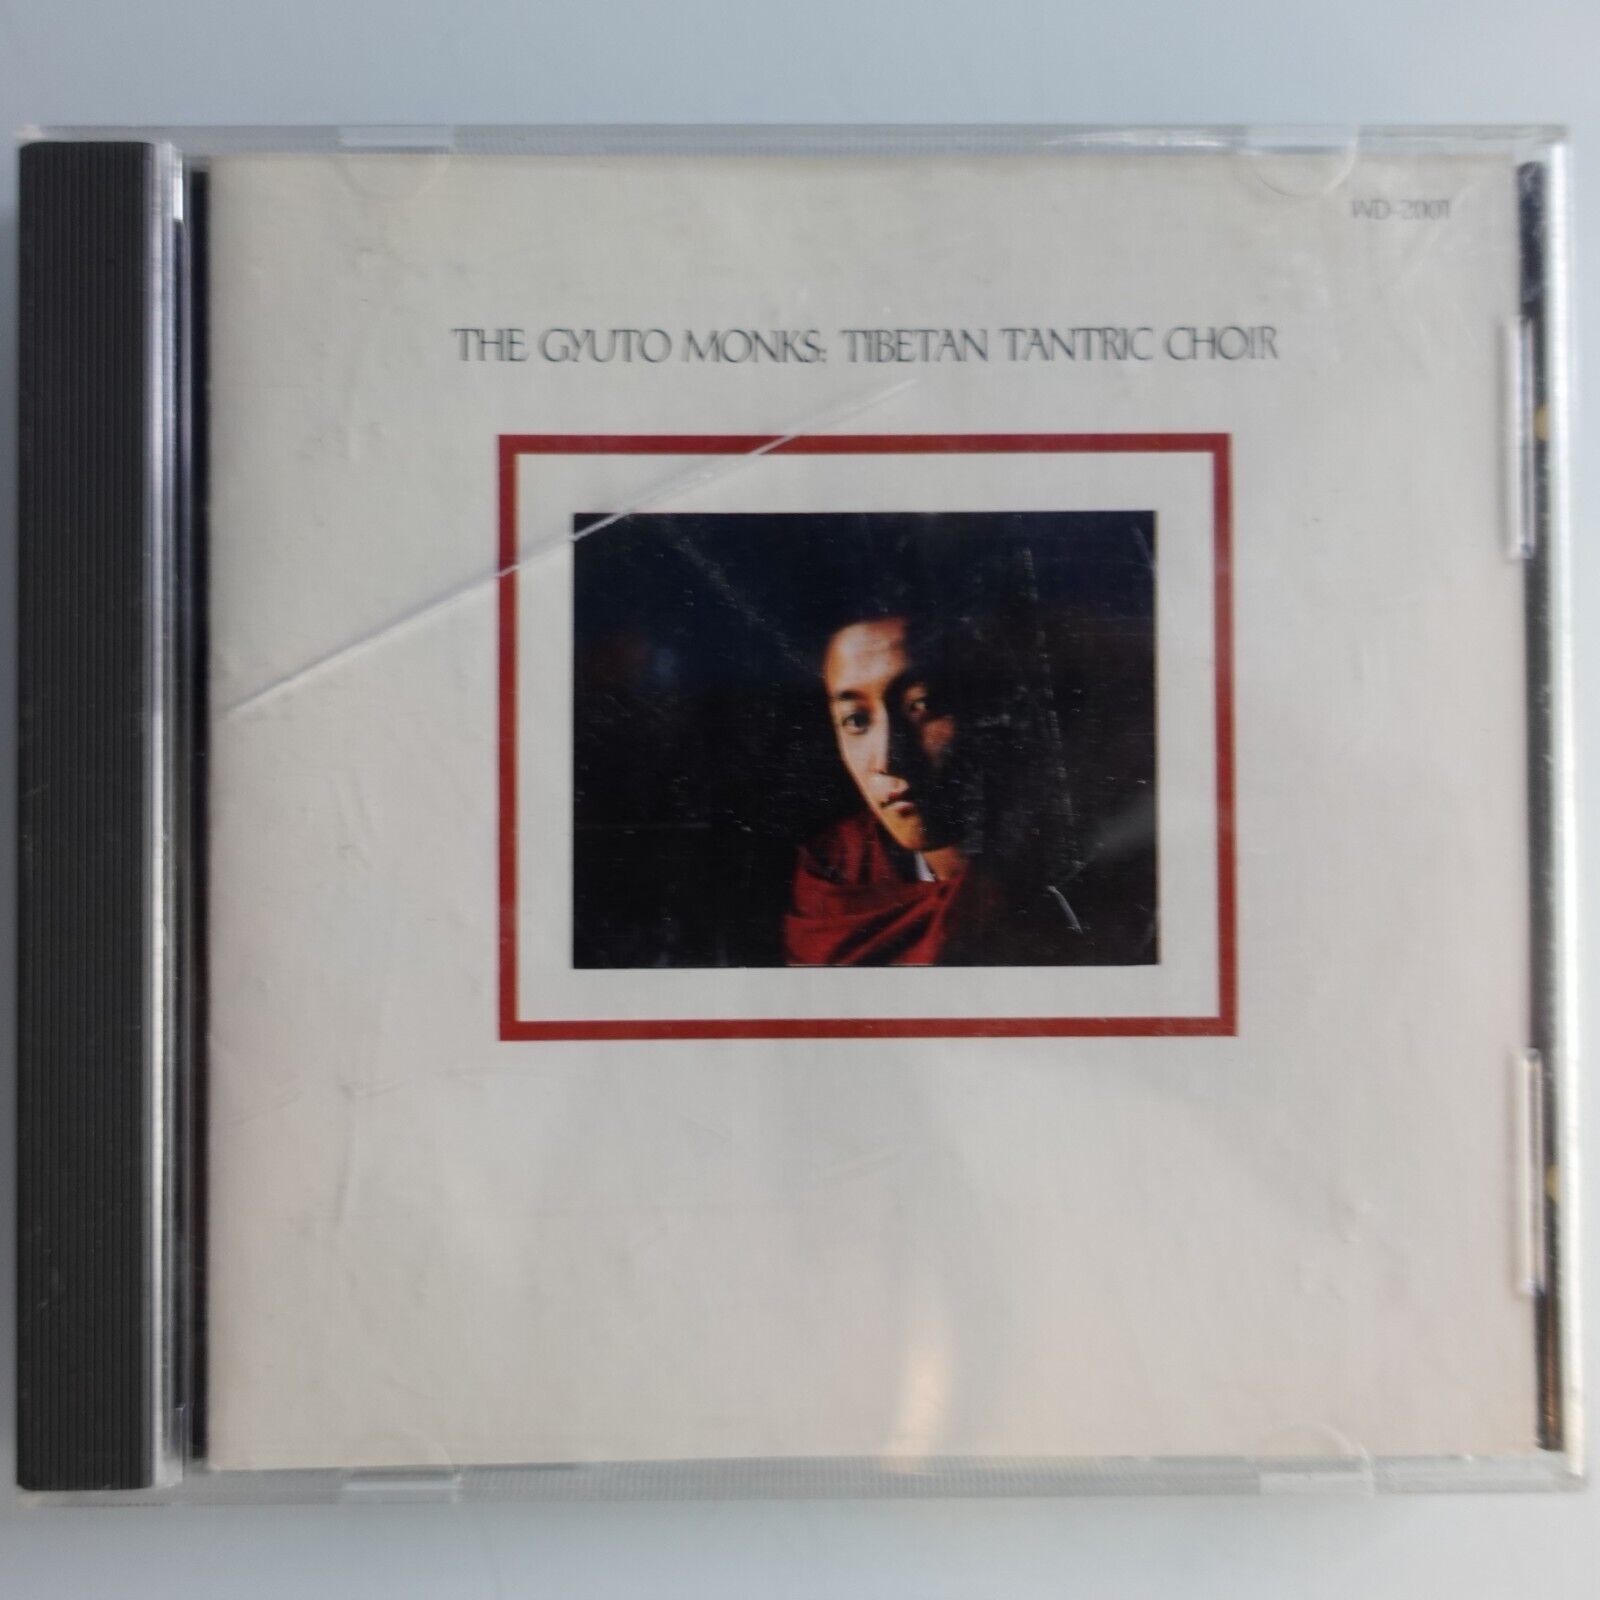 Tibetan Tantric Choir by Gyuto Monks Tantric Choir (CD, Oct-1990, Windham Hill R